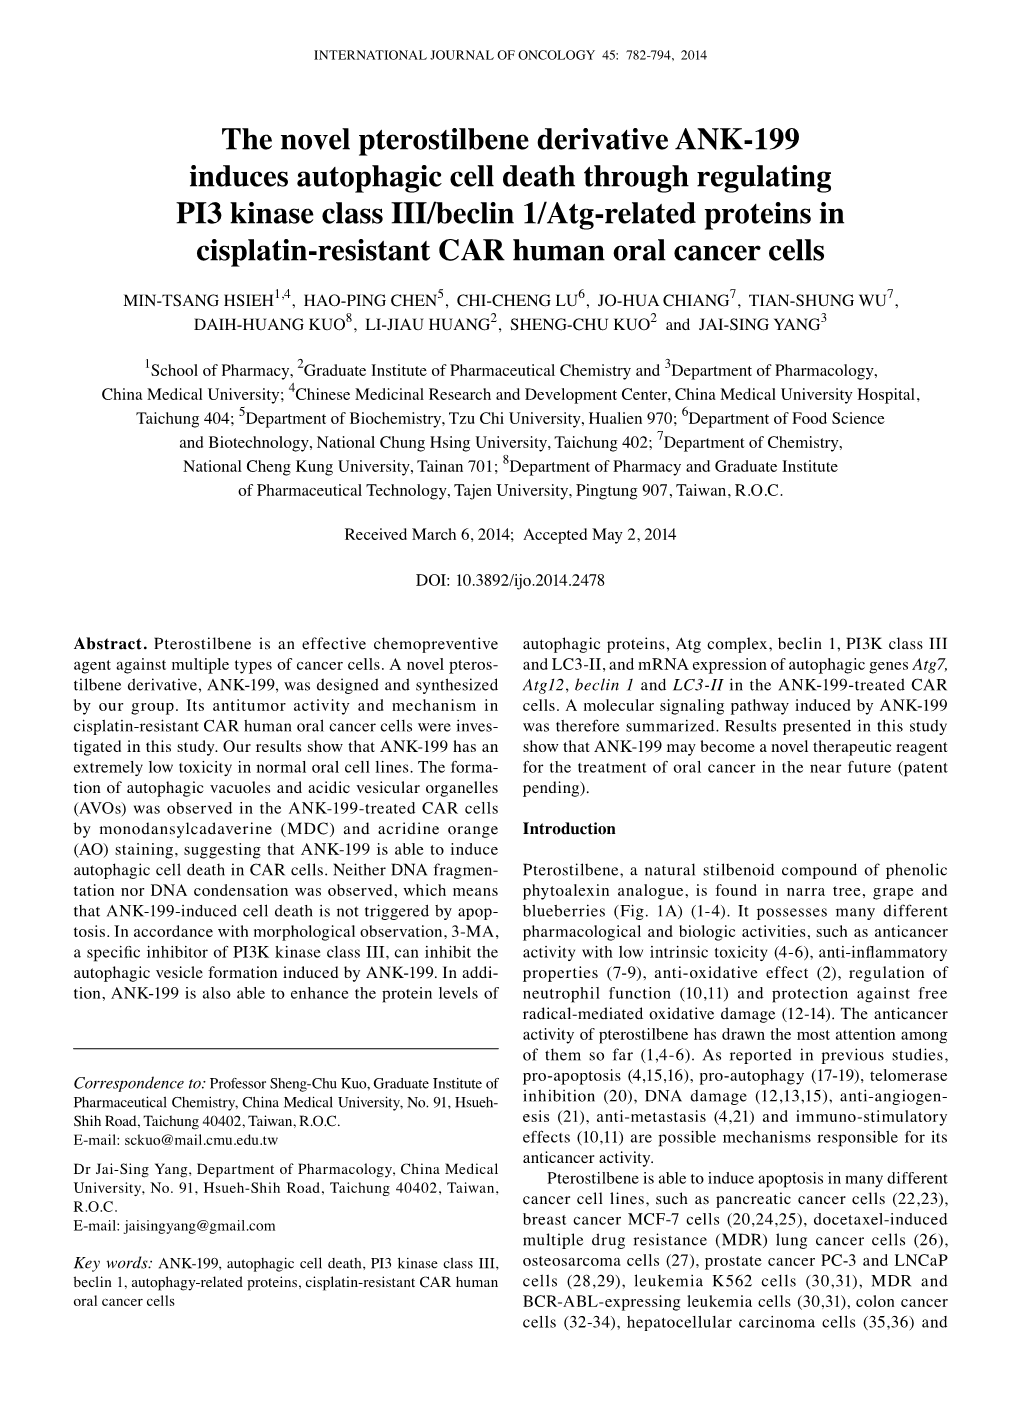 The Novel Pterostilbene Derivative ANK-199 Induces Autophagic Cell Death Through Regulating PI3 Kinase Class III/Beclin 1/Atg-Re